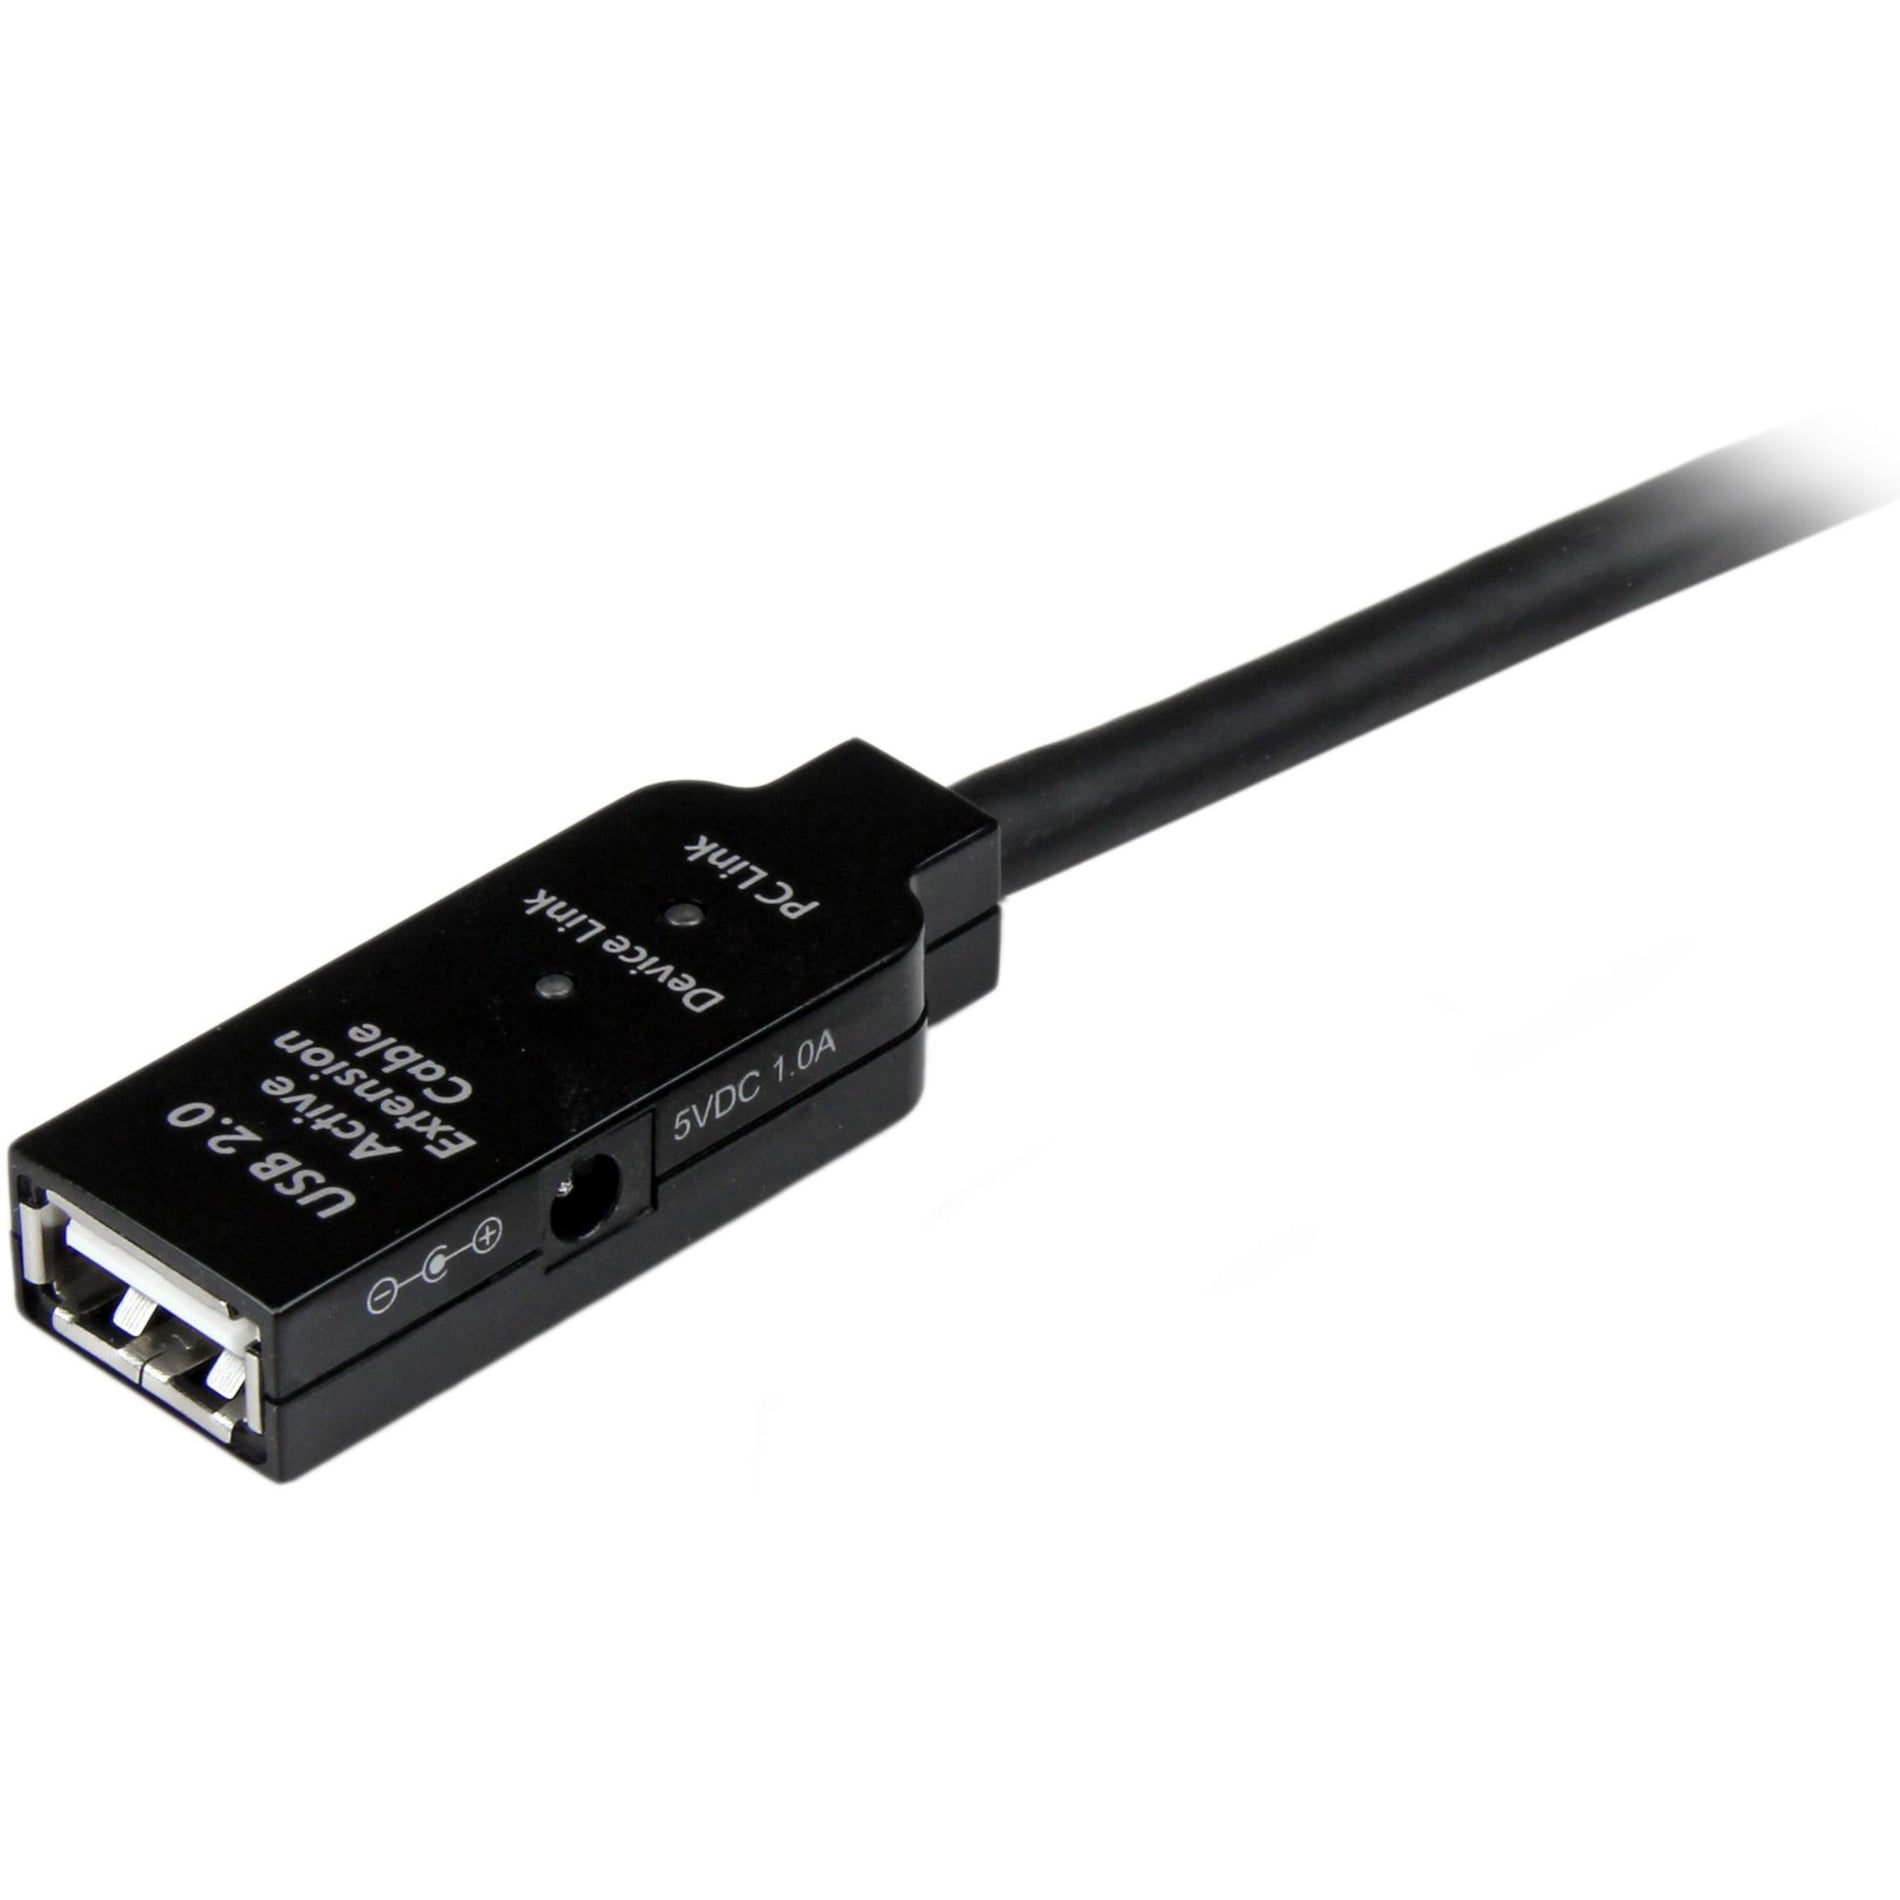 StarTech.com USB2AAEXT15M 15m USB 2.0 Active Extension Cable - M/F, 49.21 ft Data Transfer Cable, 480 Mbit/s, Black